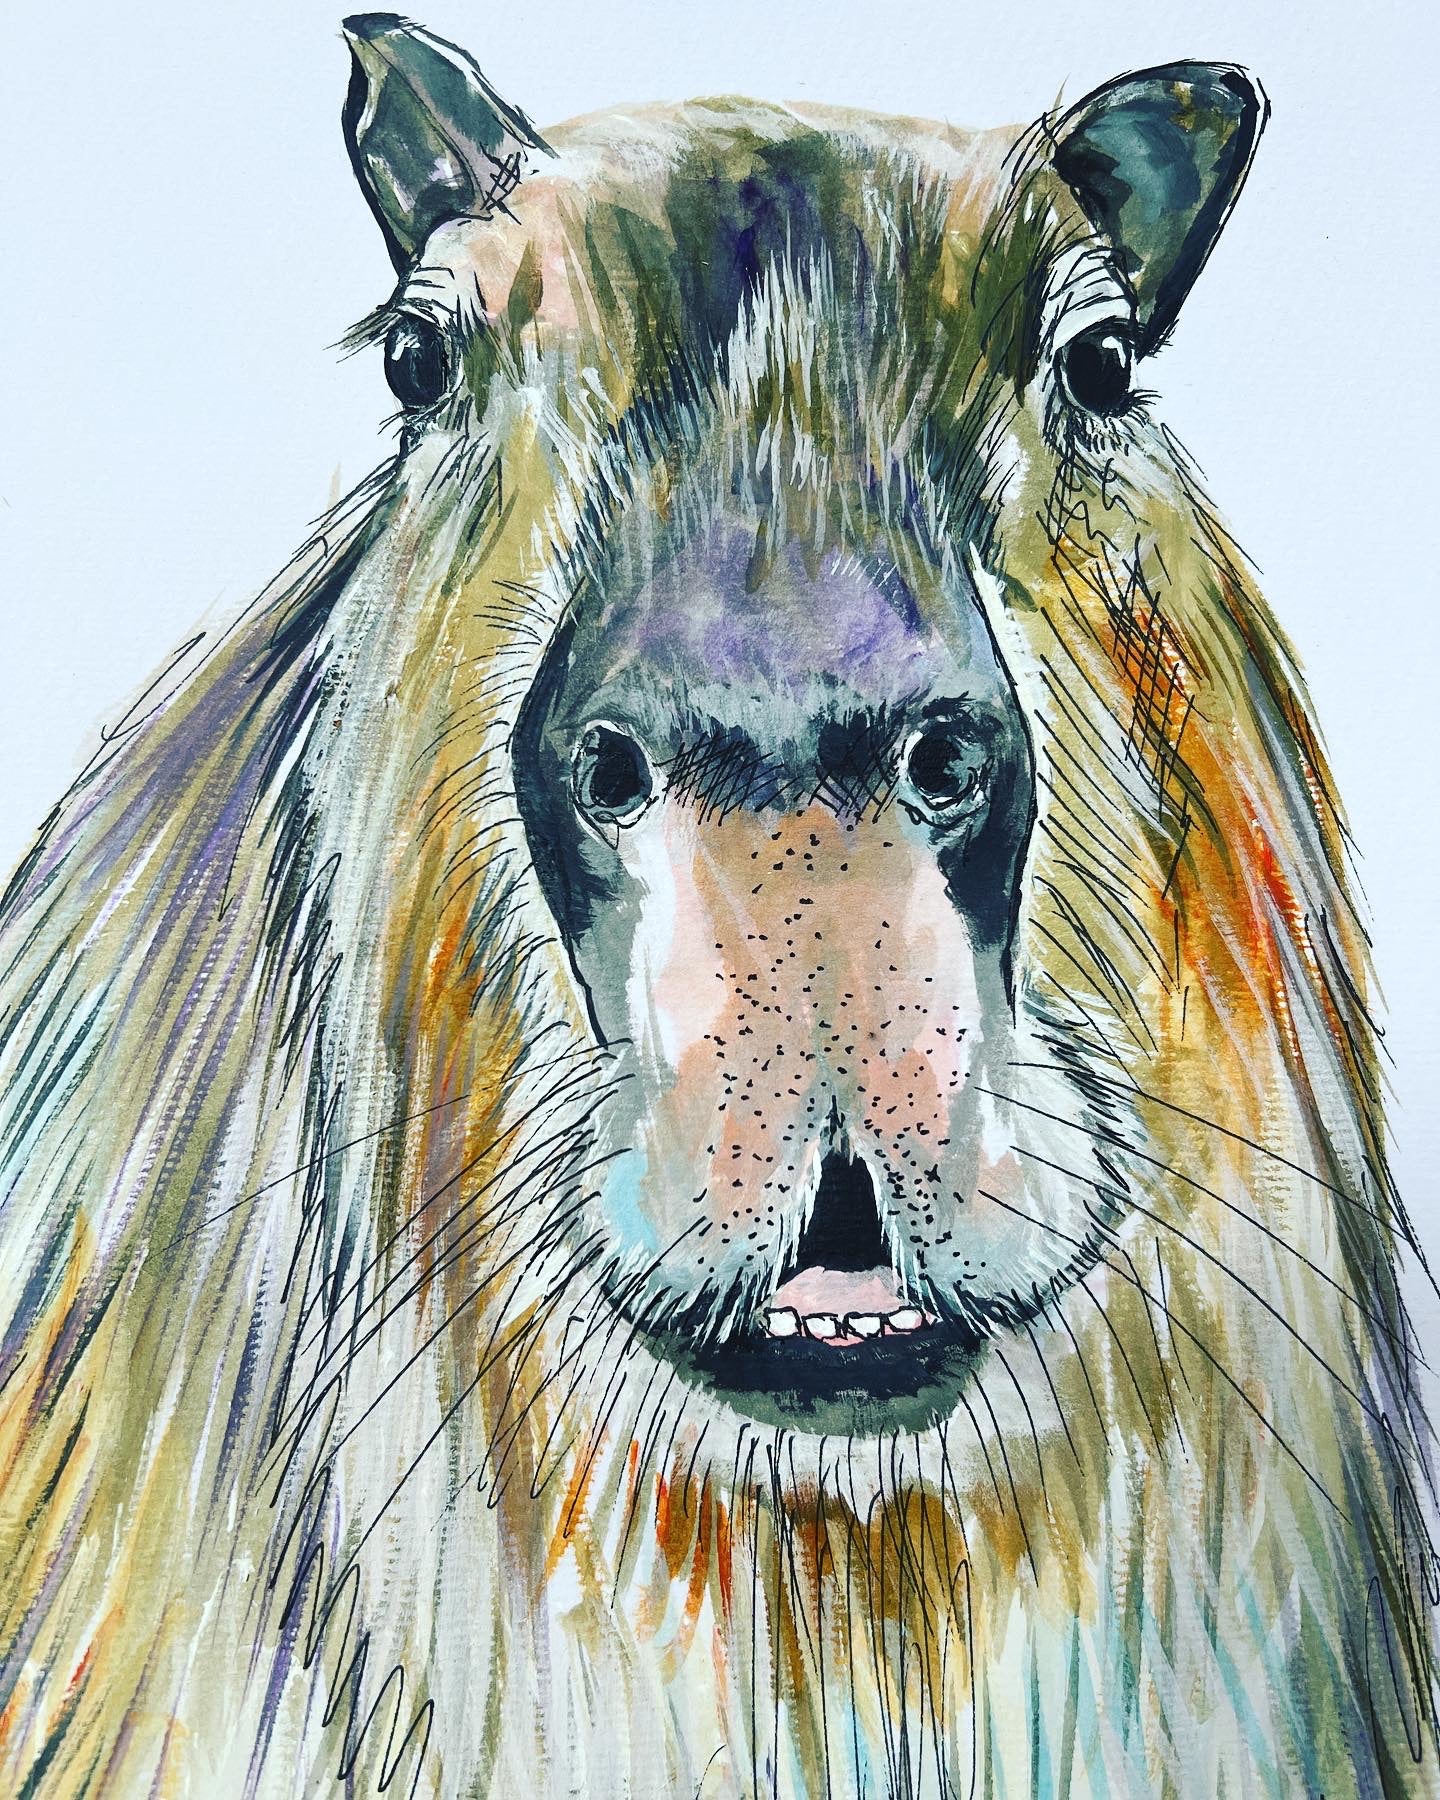 prompthunt pencil sketch portrait of a capybara